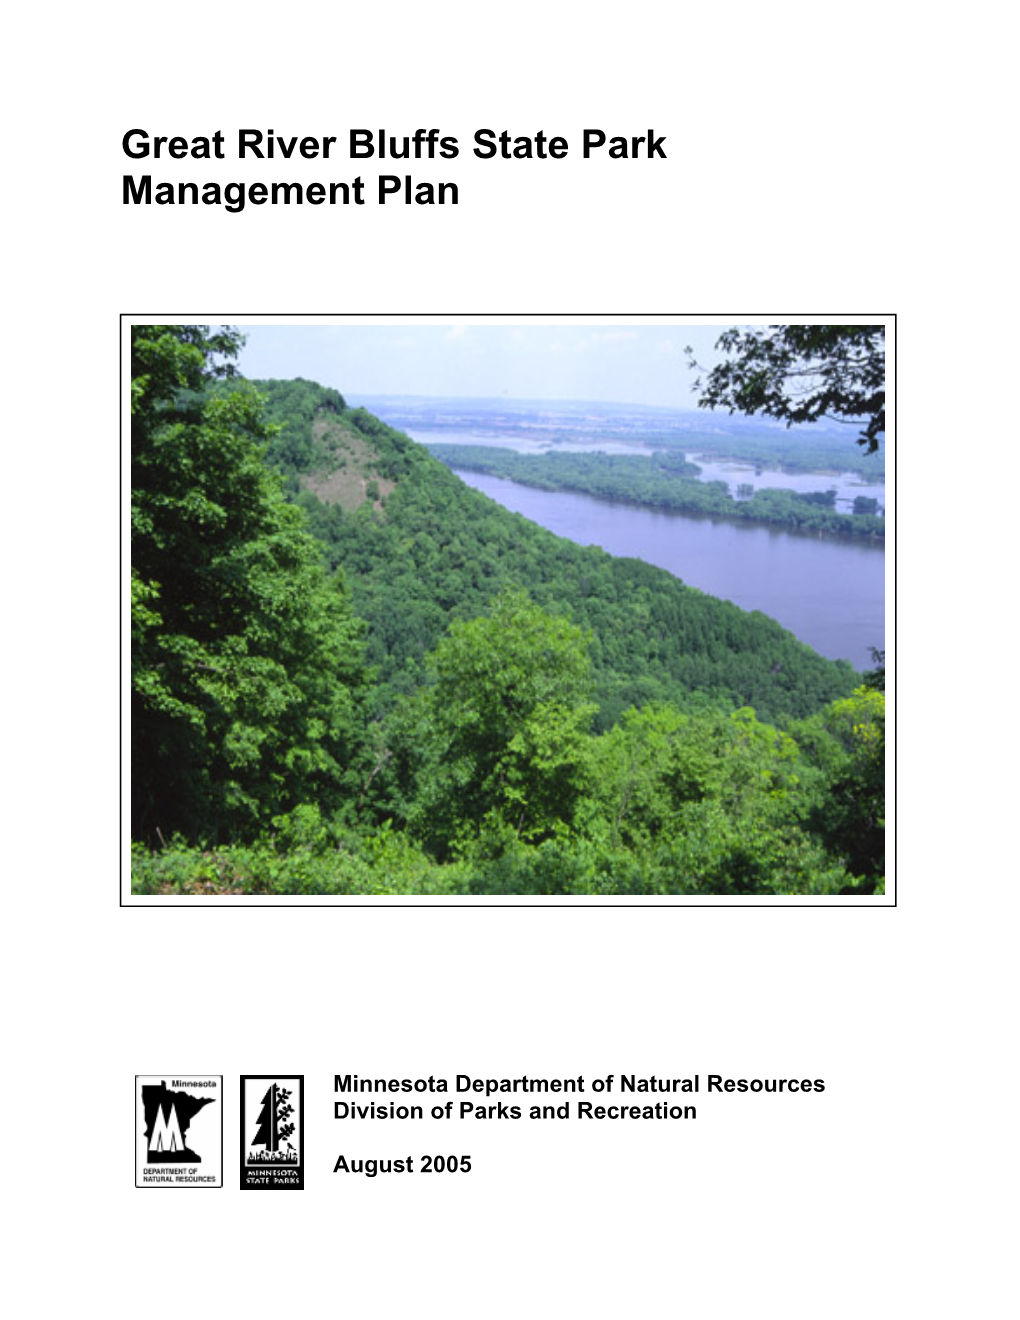 Great River Bluffs State Park Management Plan